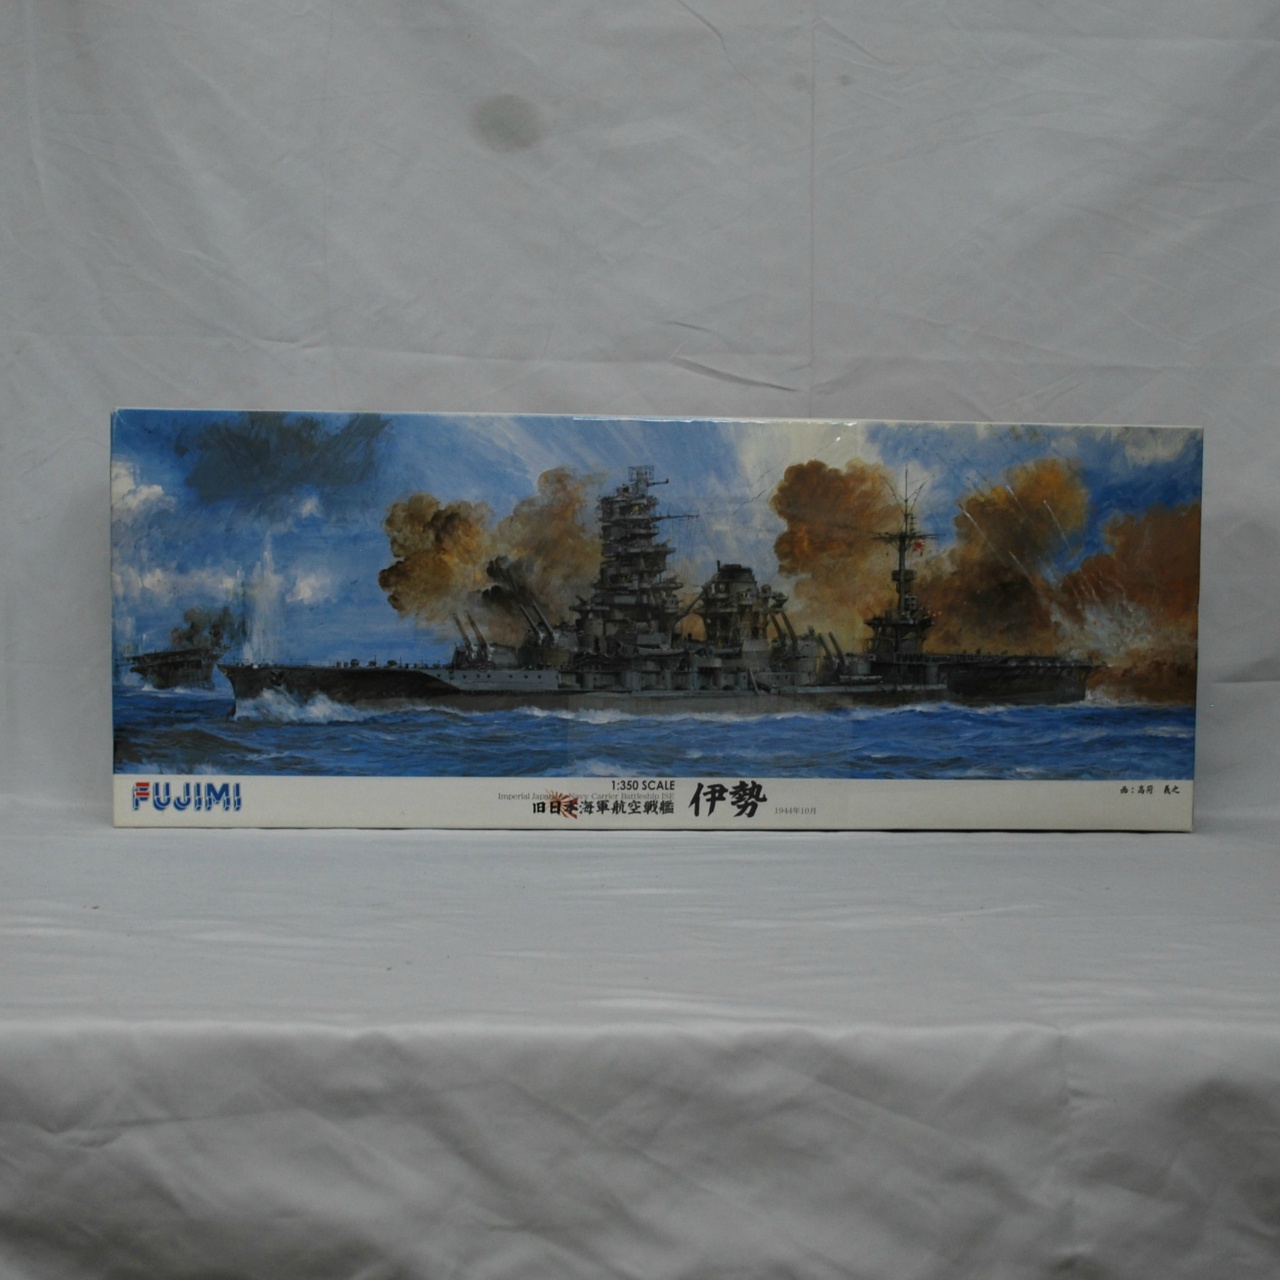 FUJIMI 1/350 Imperial Japanese Navy Carrier Battleship Ise